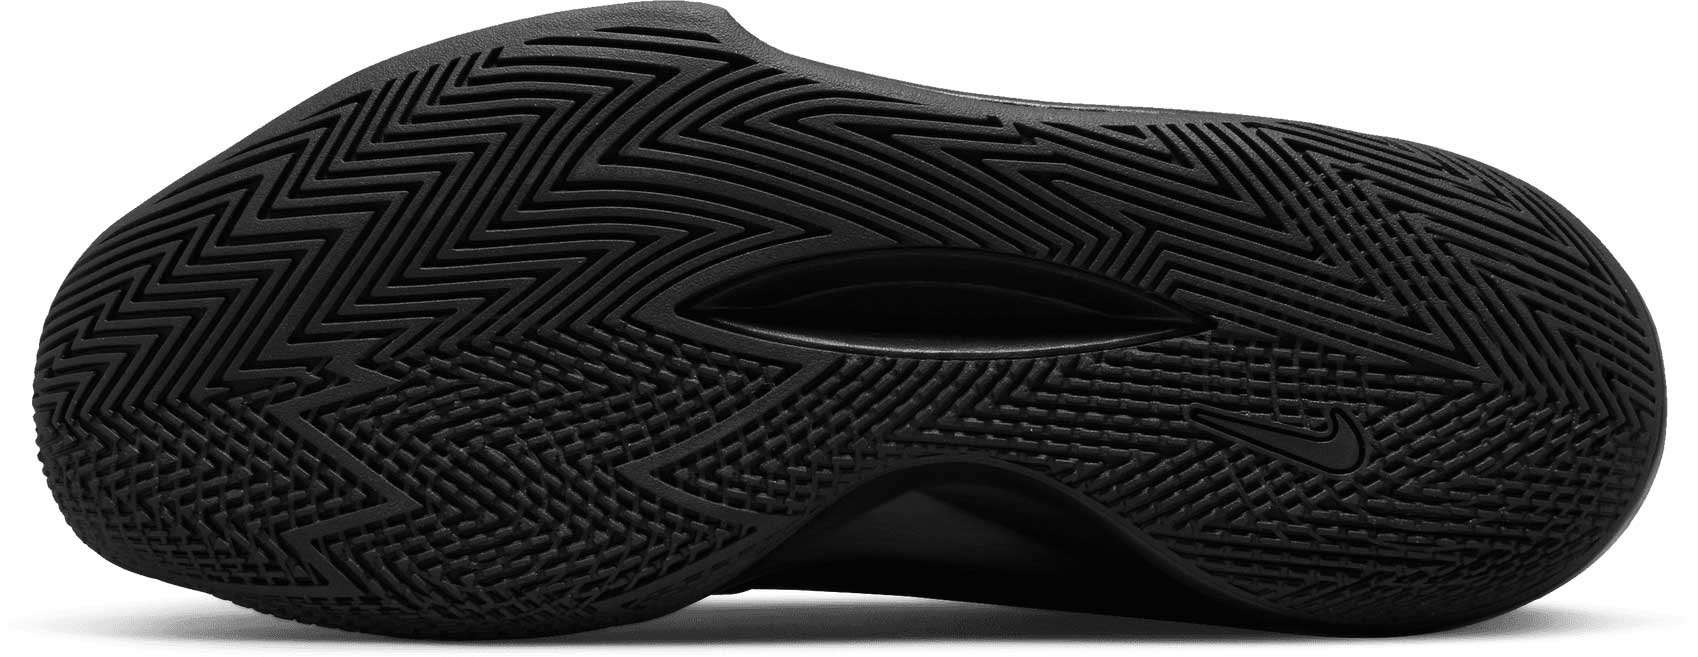 Men's basketball shoes